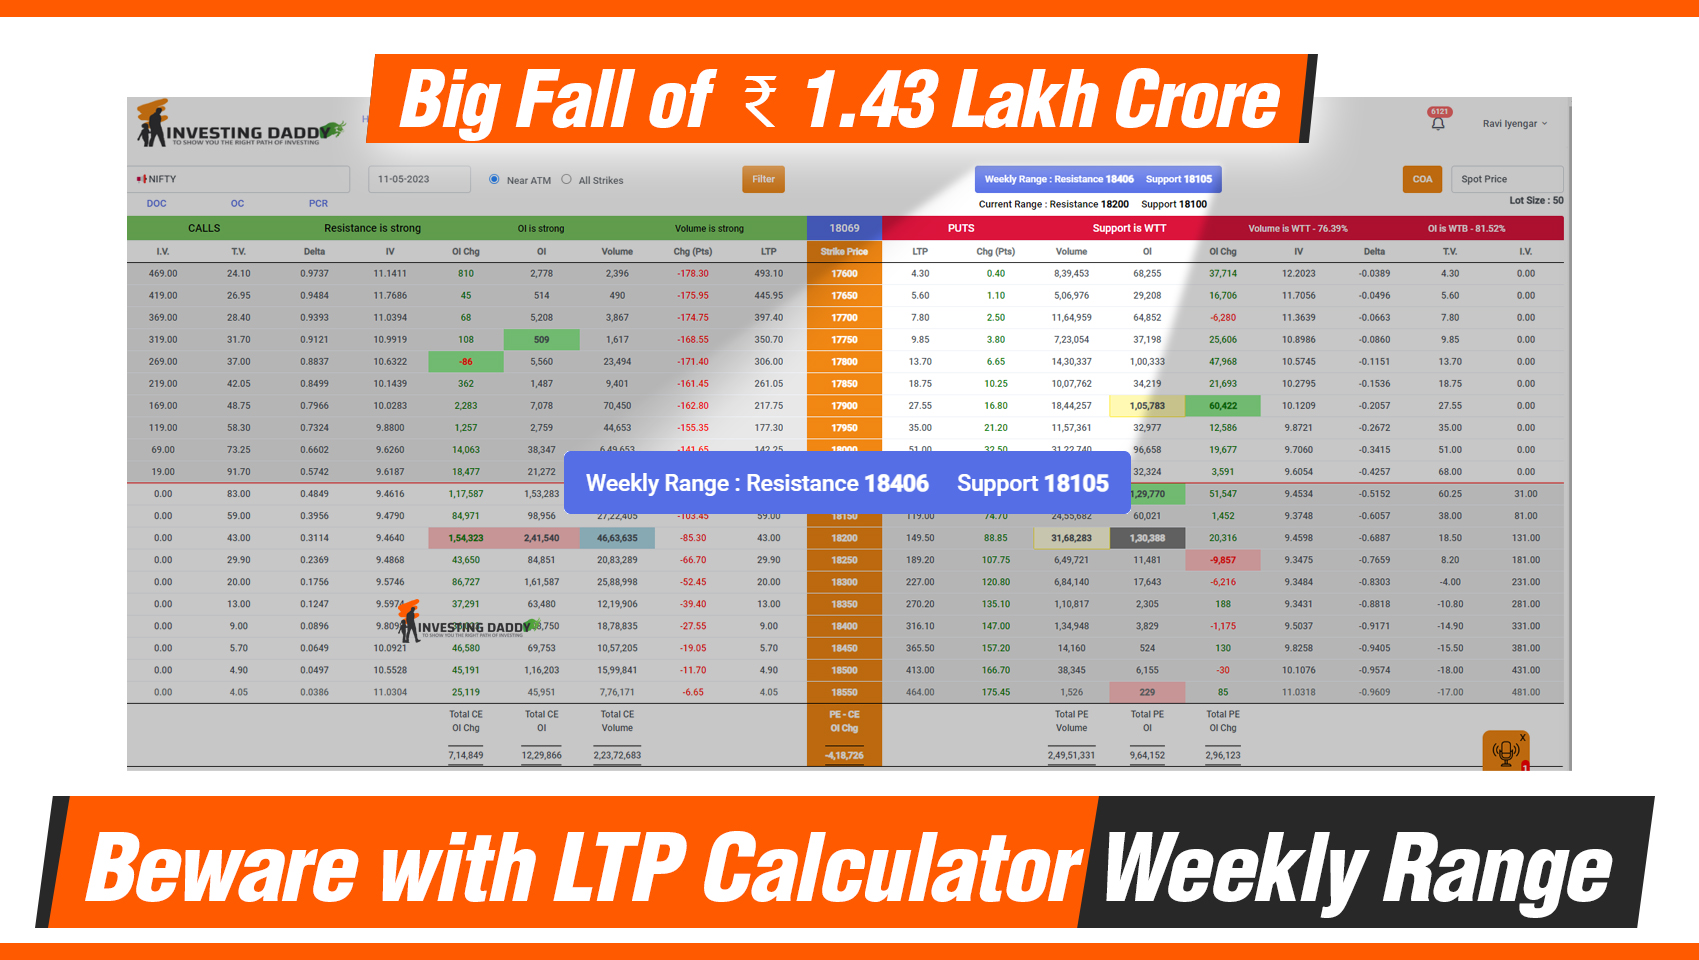 Stock Market : Big Fall of  ₹ 1.43 Lakh Crore, Beware with LTP Calculator Weekly Range